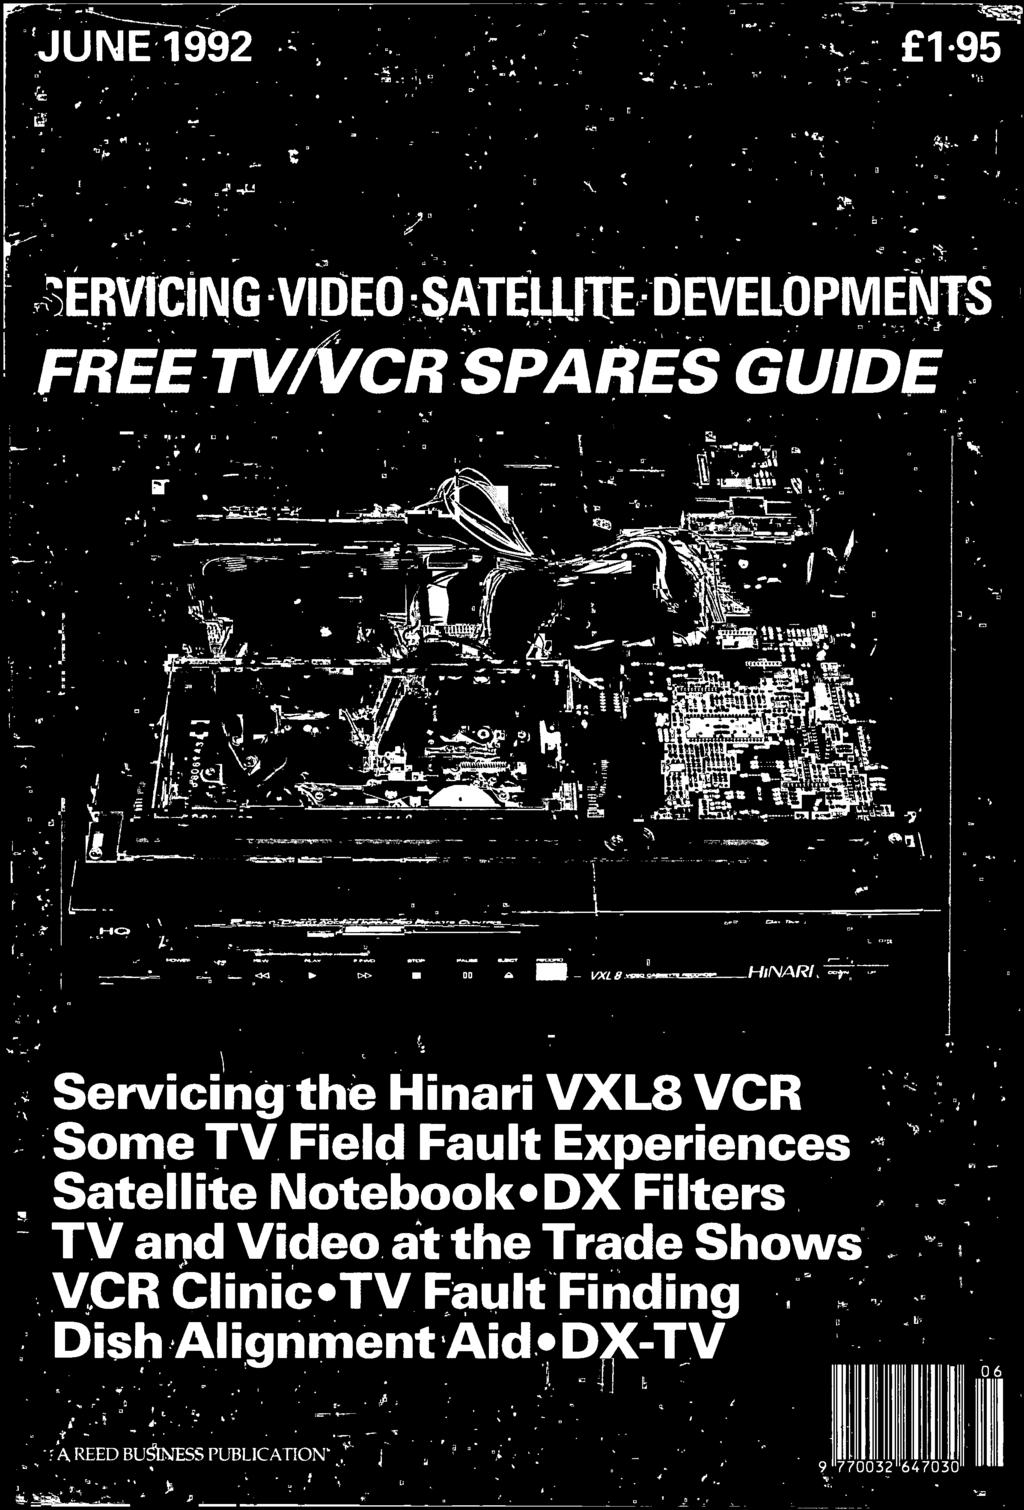 Some TV Field Fault Experiences Satellite NotebookDX